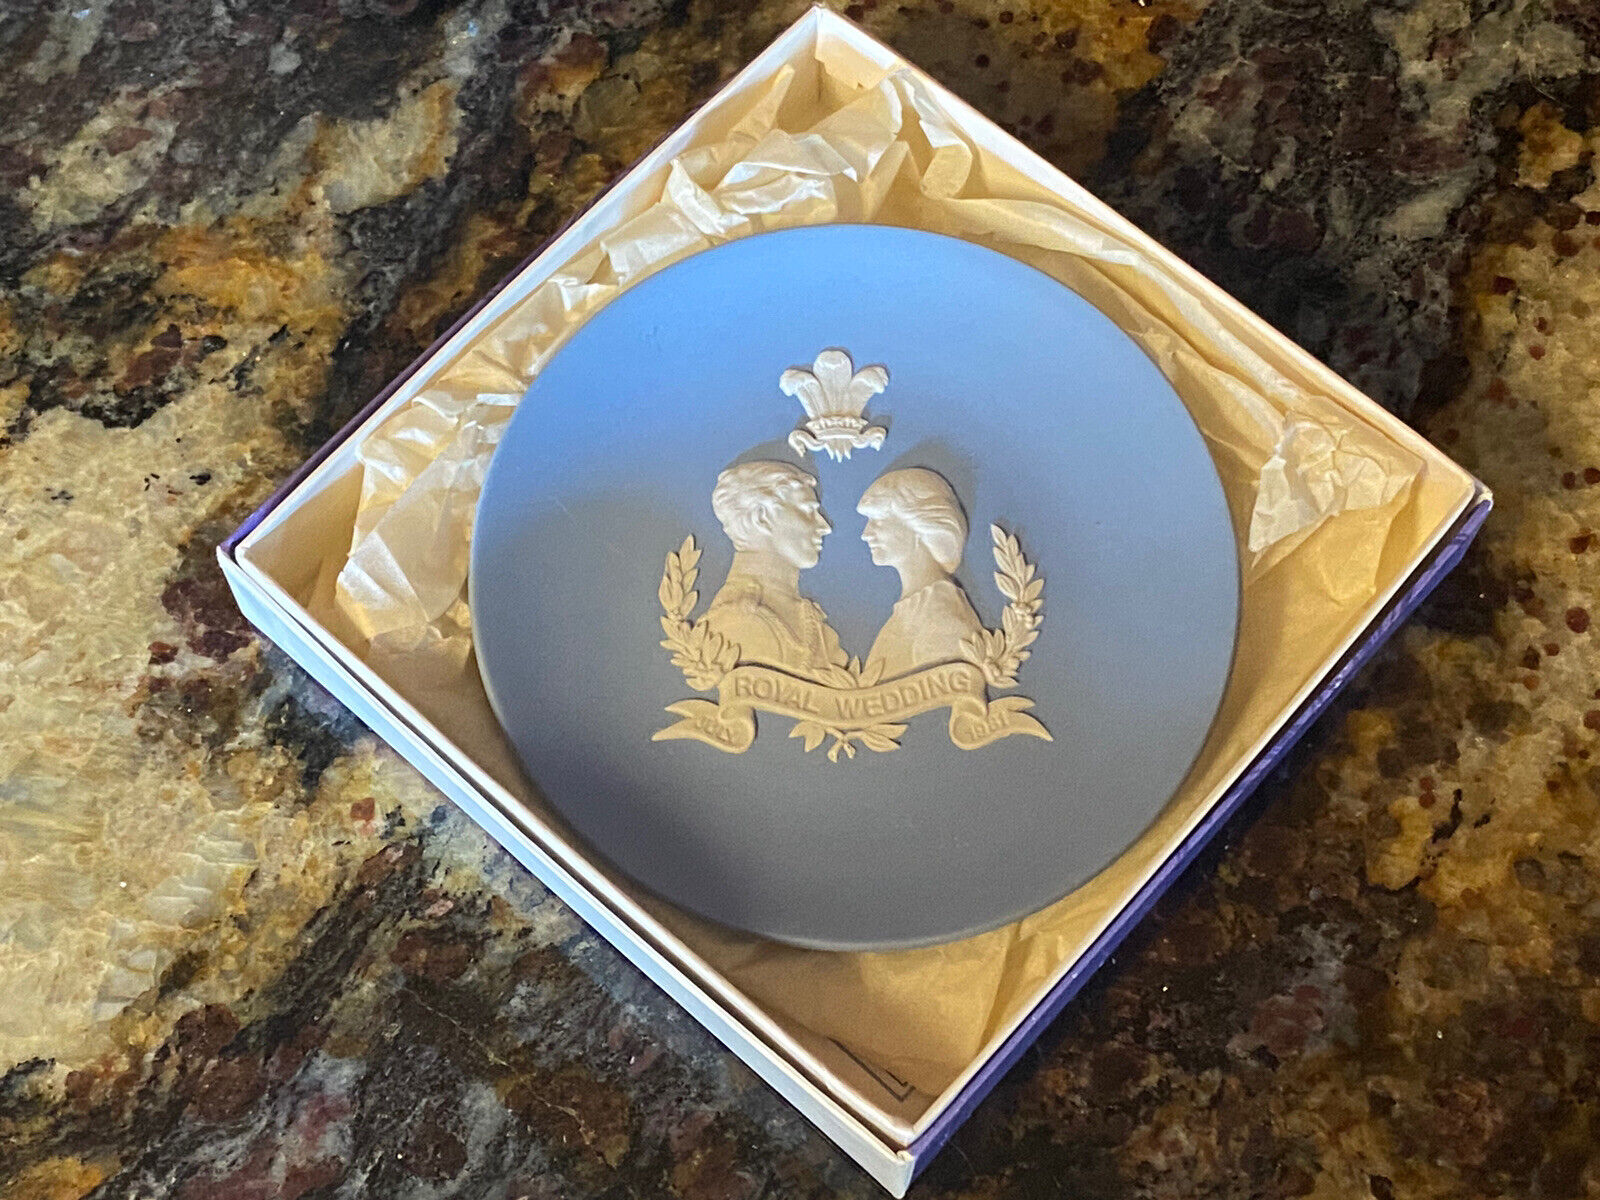 1981 Wedgwood Royal Wedding Charles and Diana Souvenir Plate WITH ORIGINAL BOX